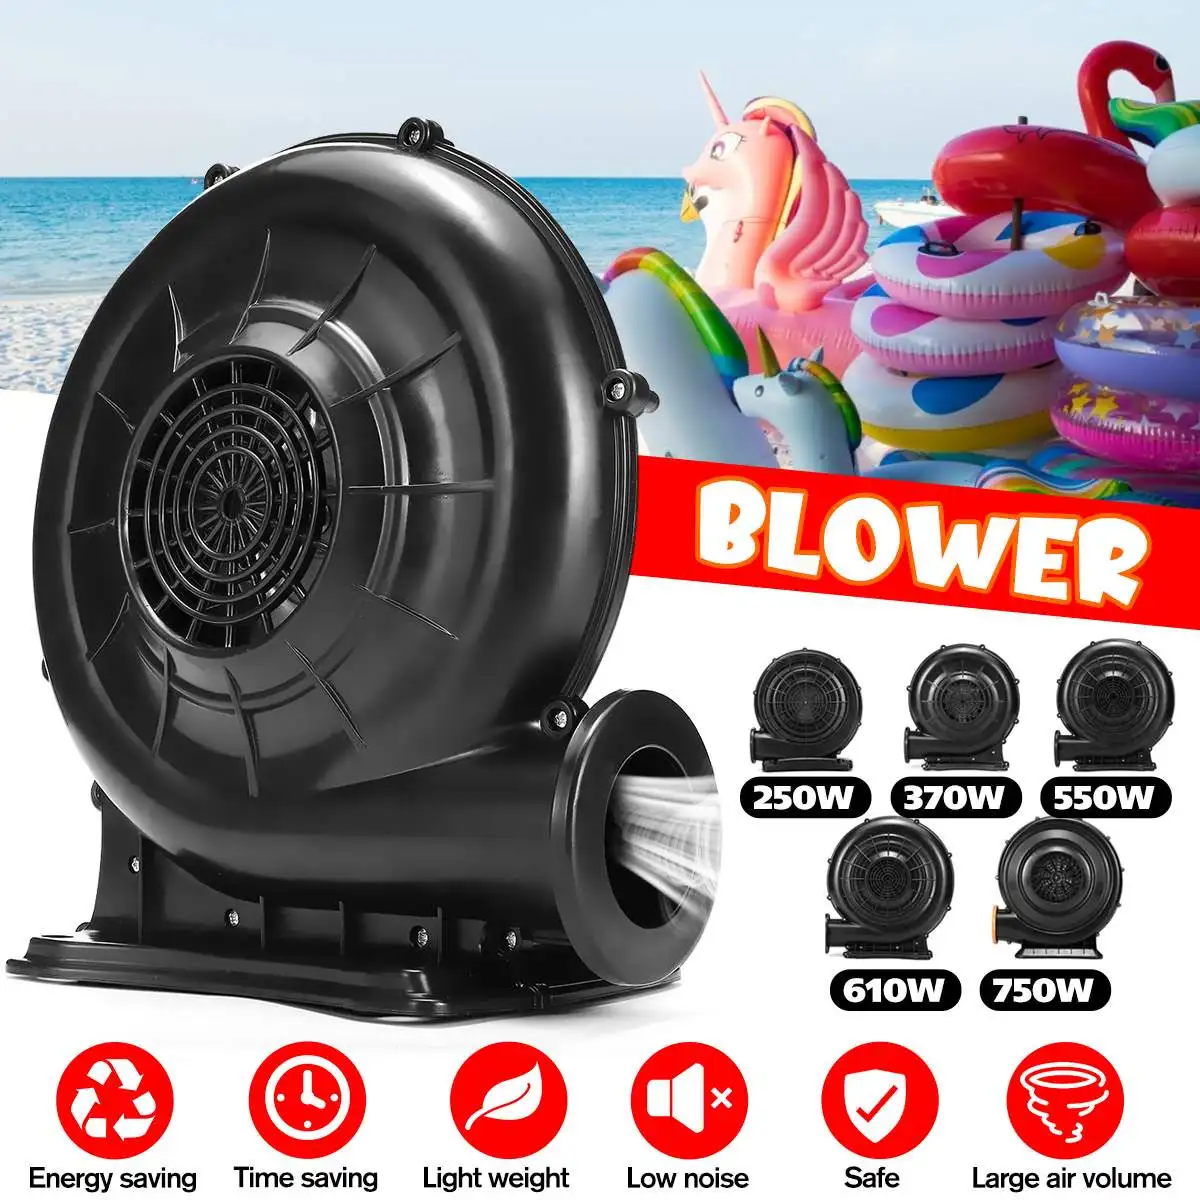 

250W/370W/550W/610W/750W Electric Air Blower Pump Fan Inflatable Blower Machine Pump Inflatable Screen Blower for Wedding Party